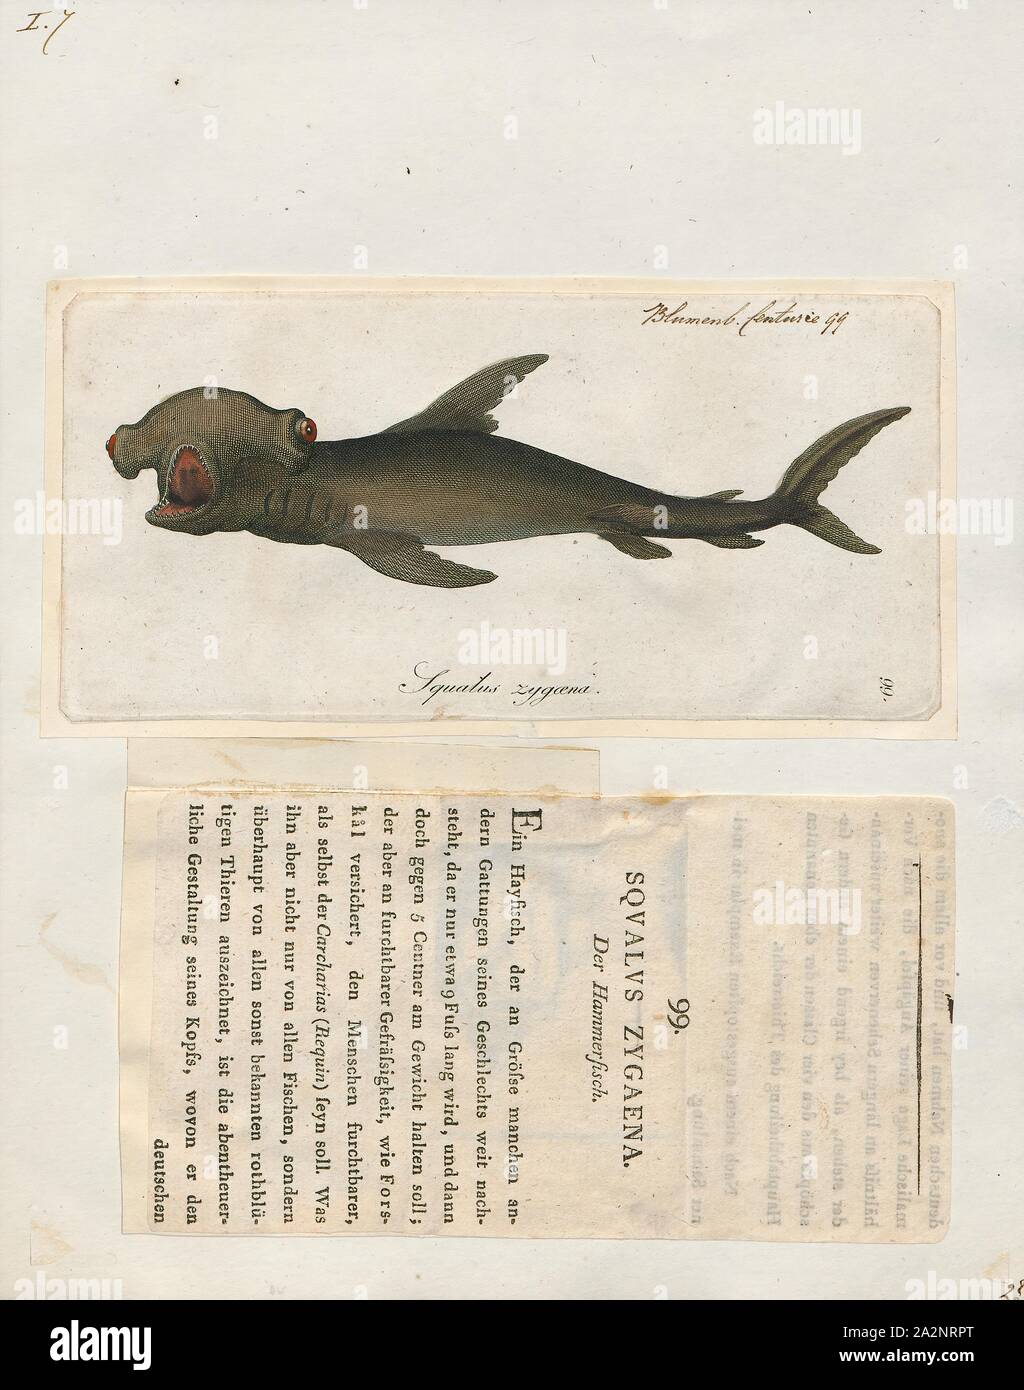 Zygaena blochii, Print, 1700-1880 Stock Photo